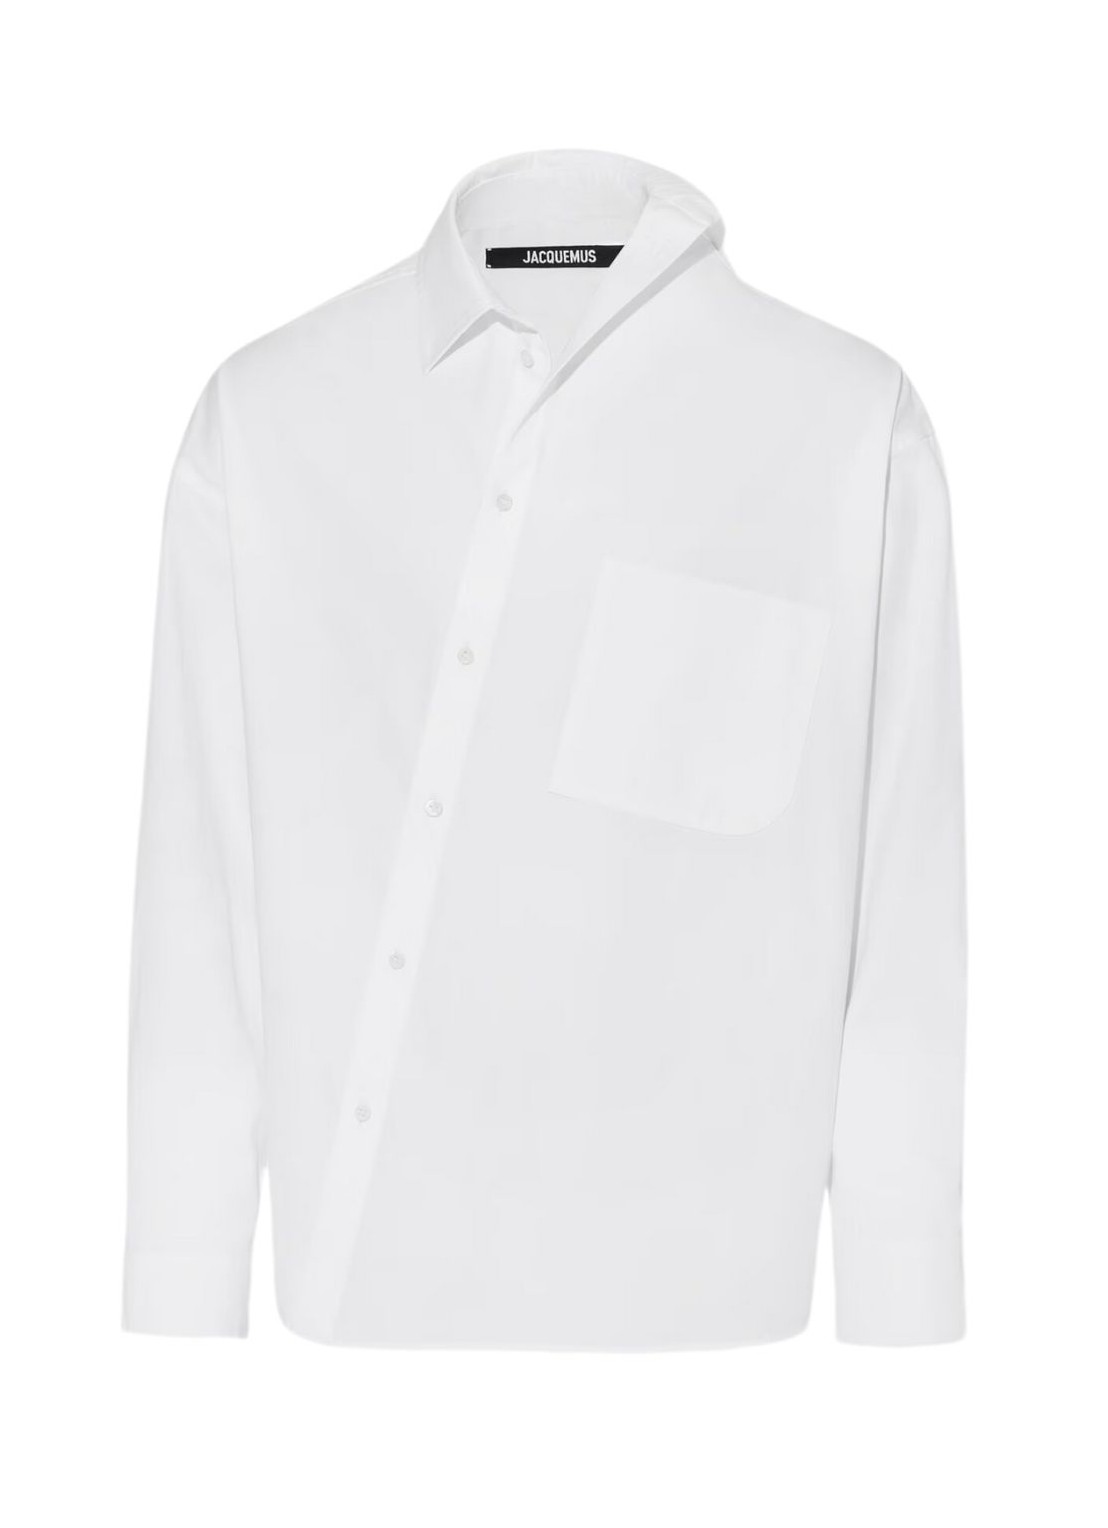 Camiseria jacquemus shirt man la chemise cuadro 24e245sh0801520 100 talla blanco
 